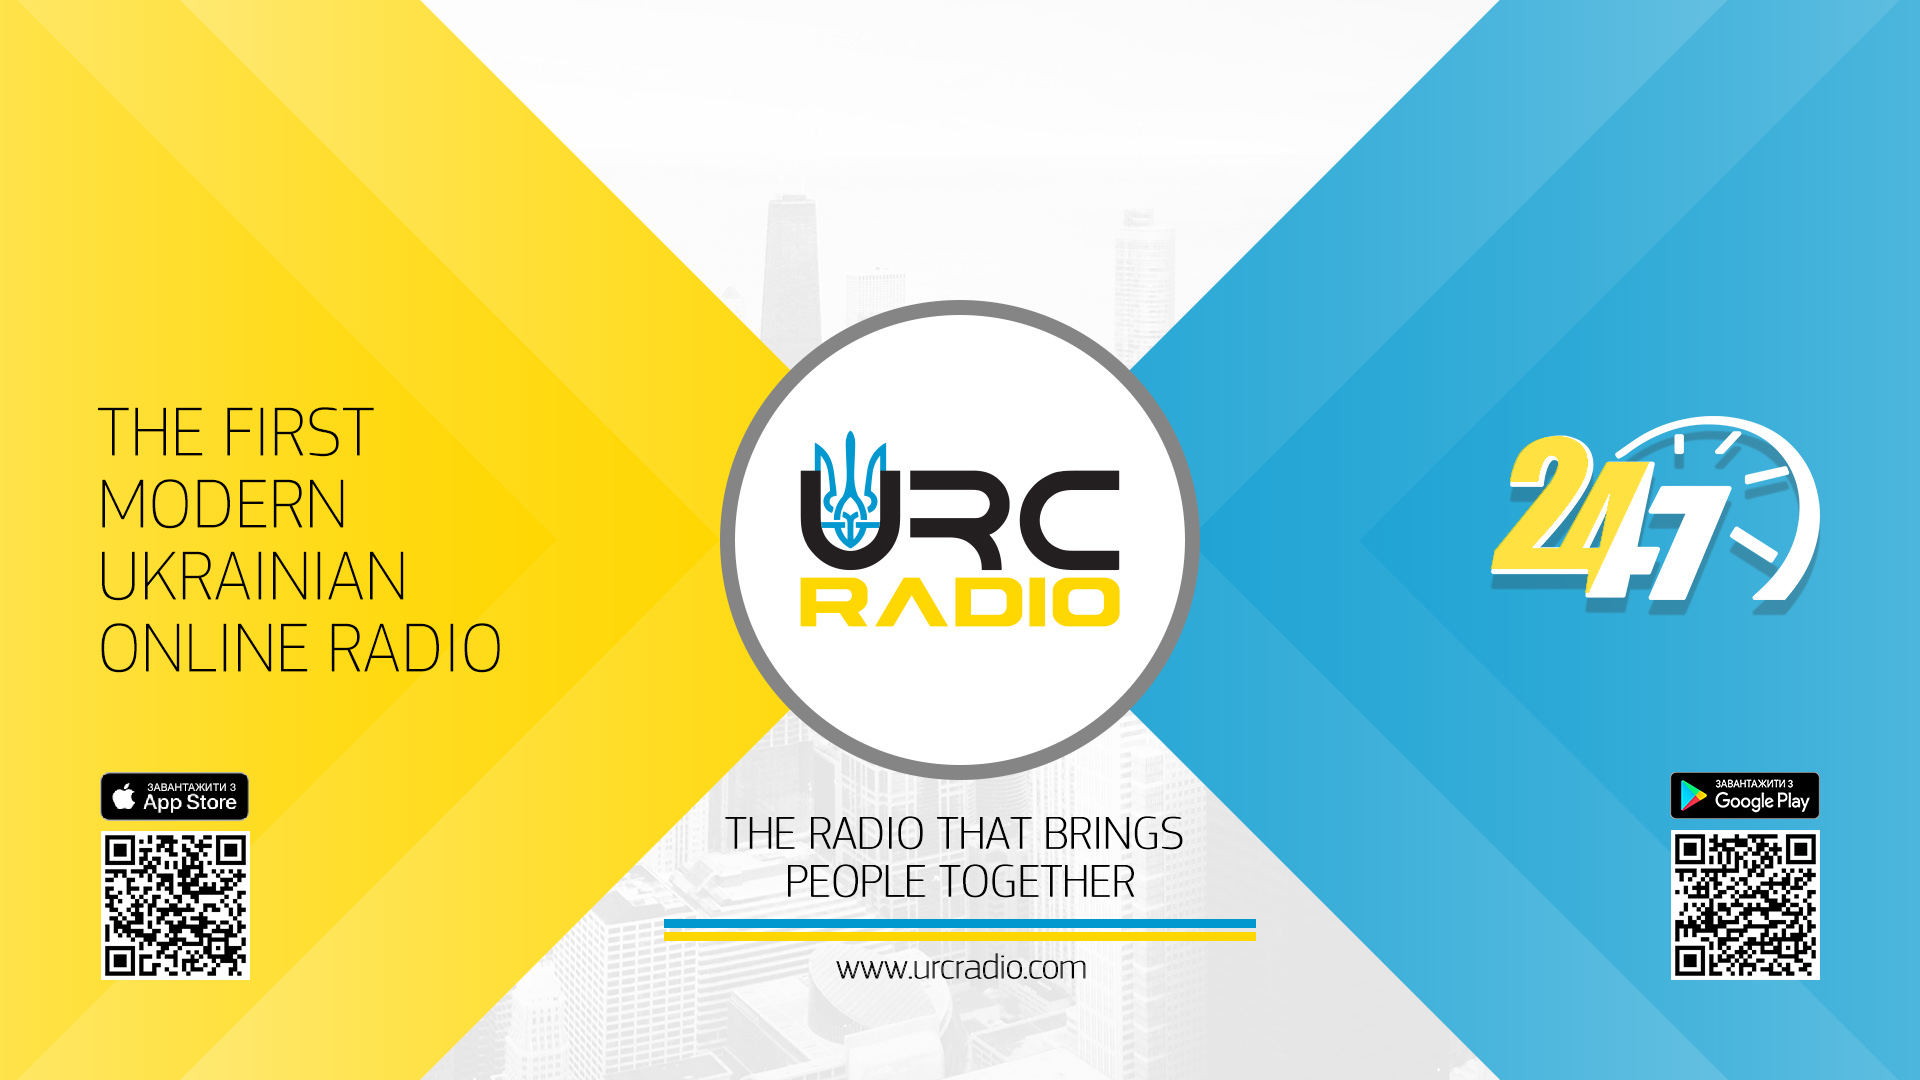 URC Radio – Ukrainian Online Radio in the US